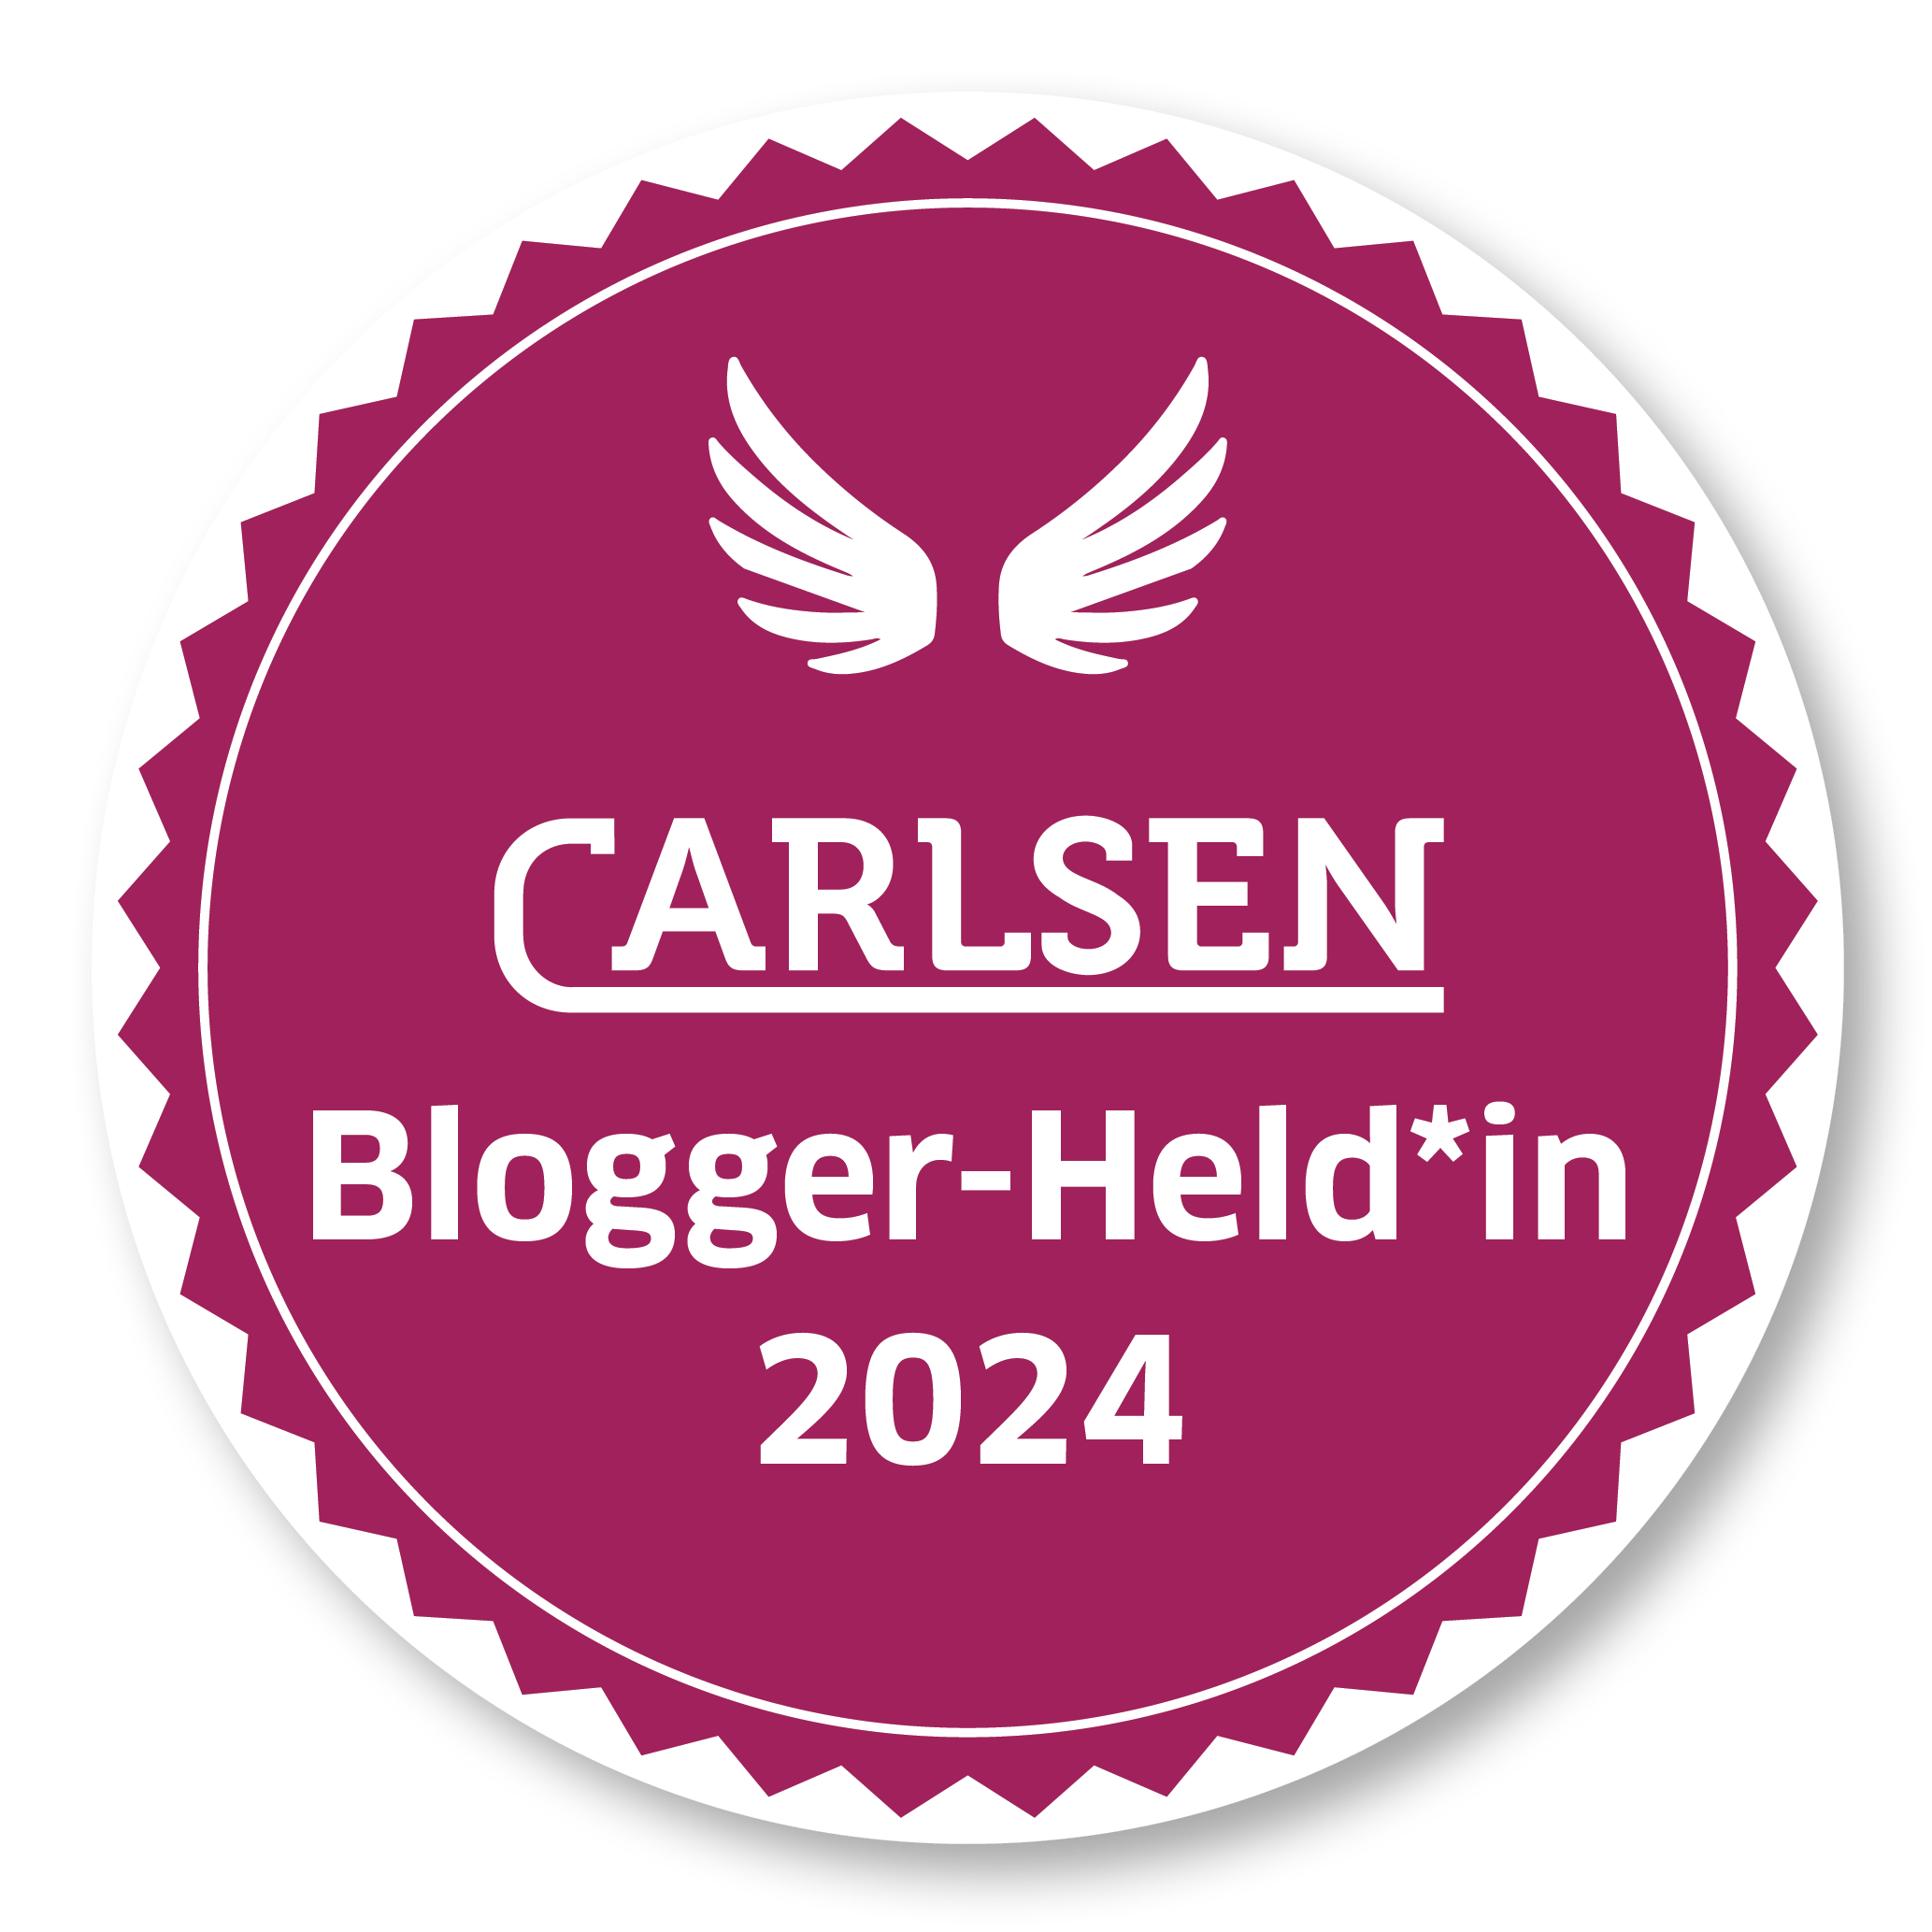 Carlsen Bloggerheld 2024